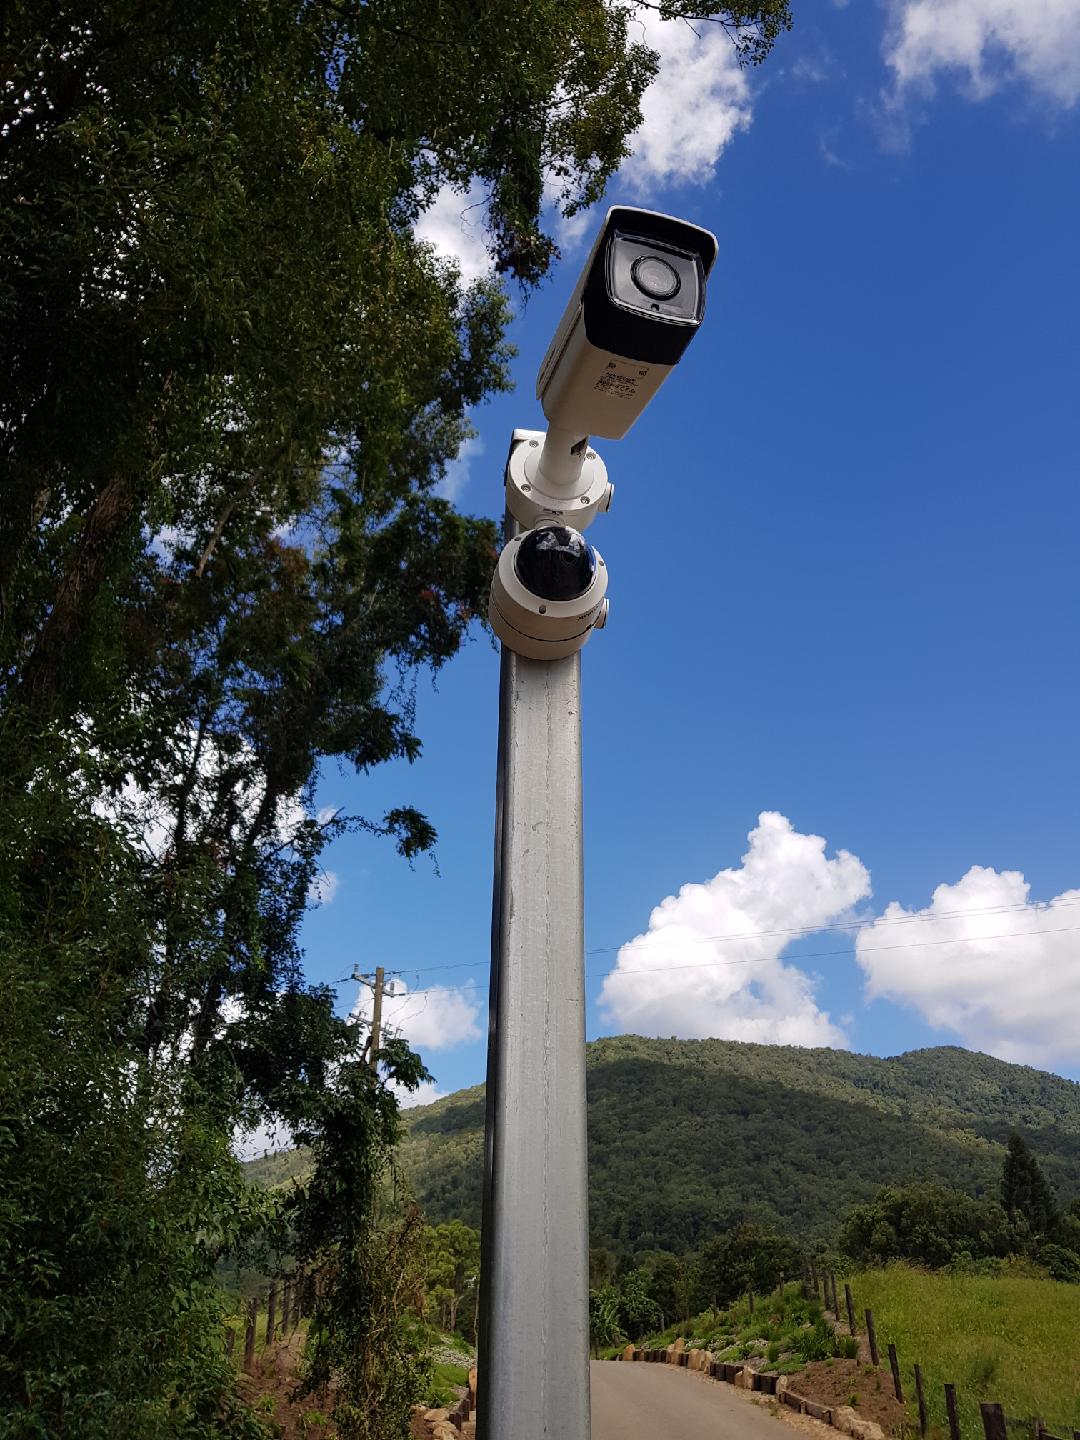  security camera poles